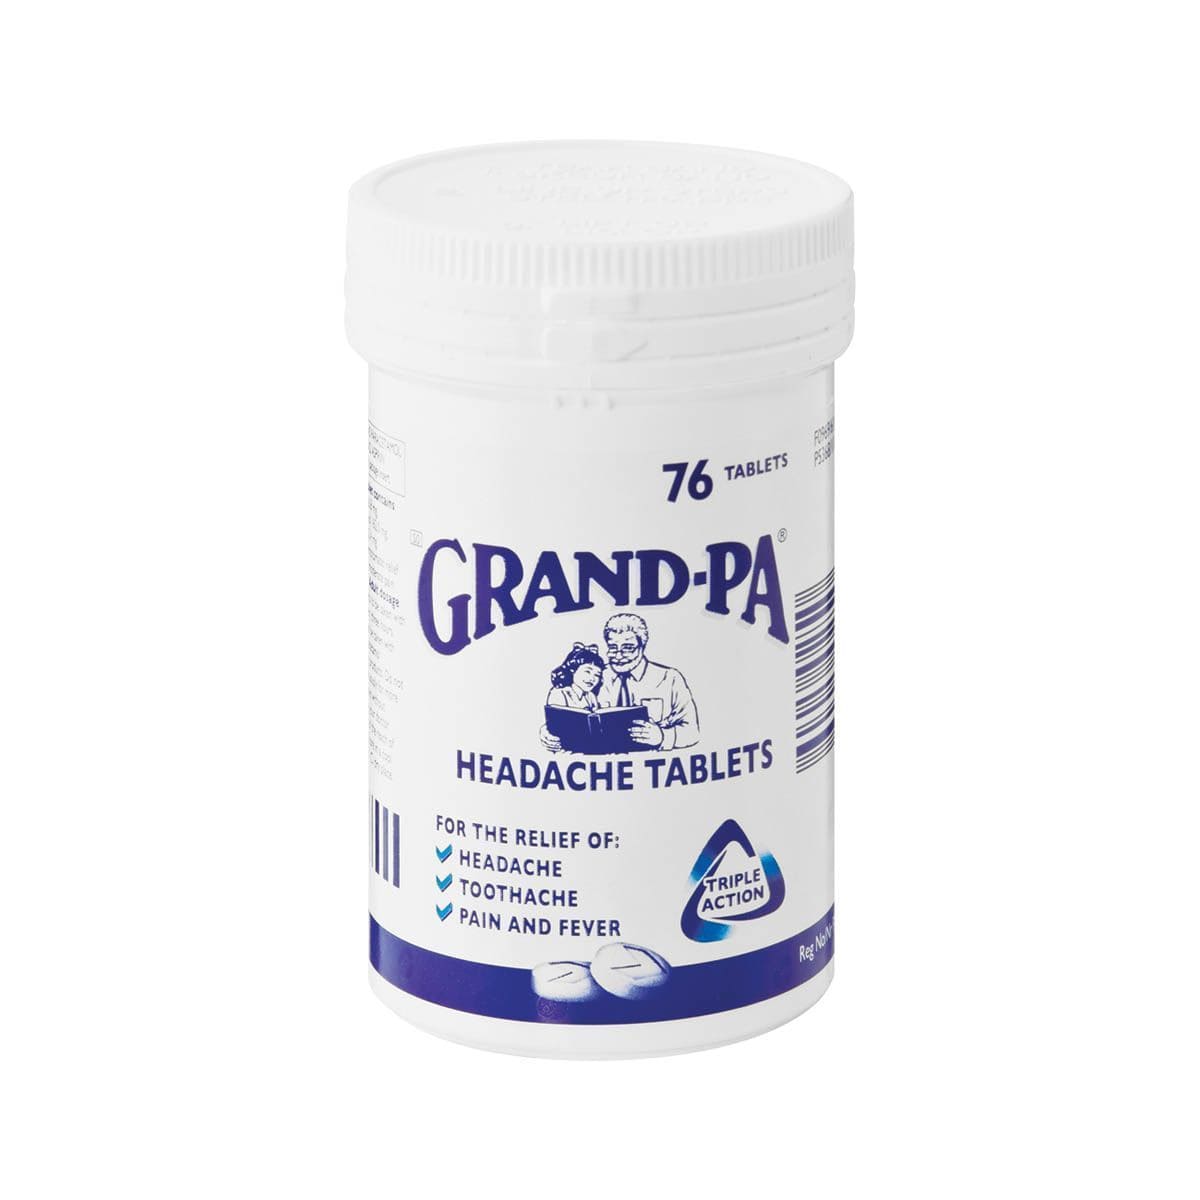 Grand-Pa Health Grand-Pa Headache Tablets, 76's 60050250 729442047